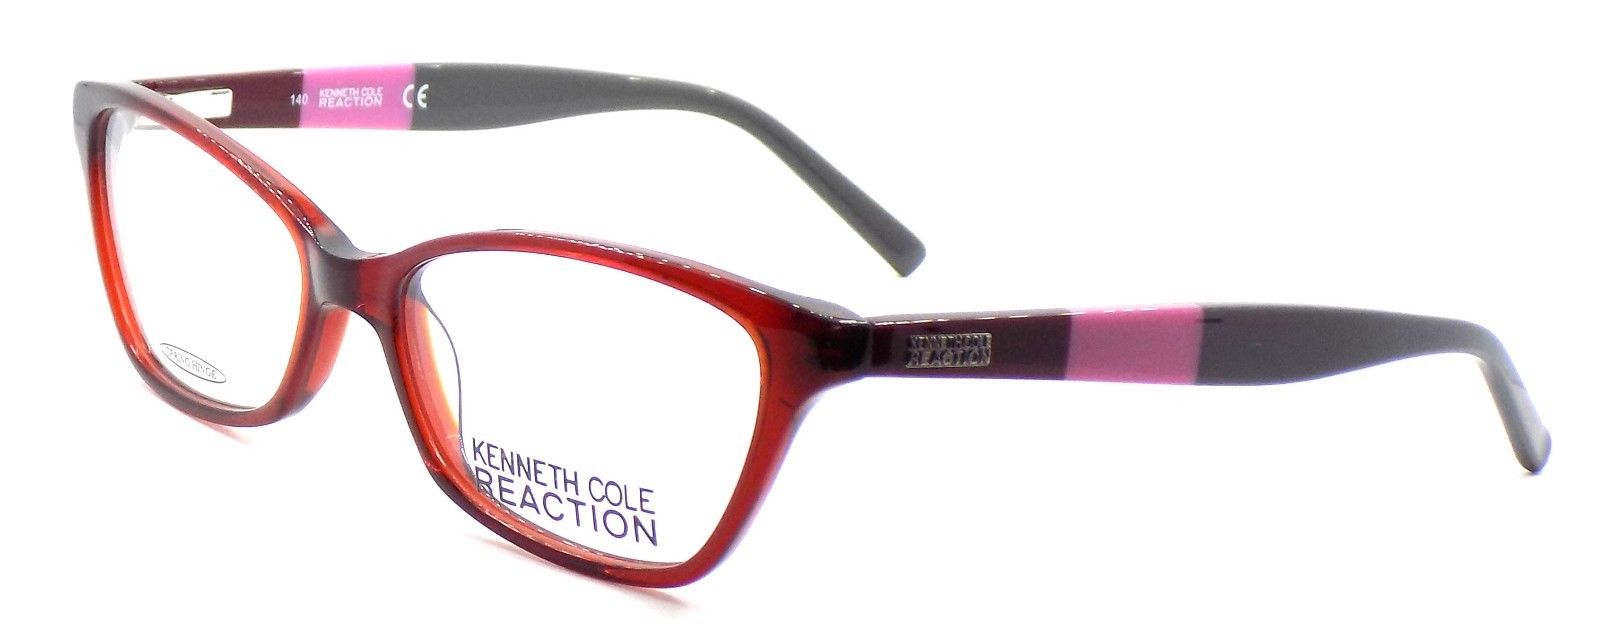 1-Kenneth Cole REACTION KC0766 069 Women's Eyeglasses 52-16-140 Shiny Bordeaux-664689666447-IKSpecs